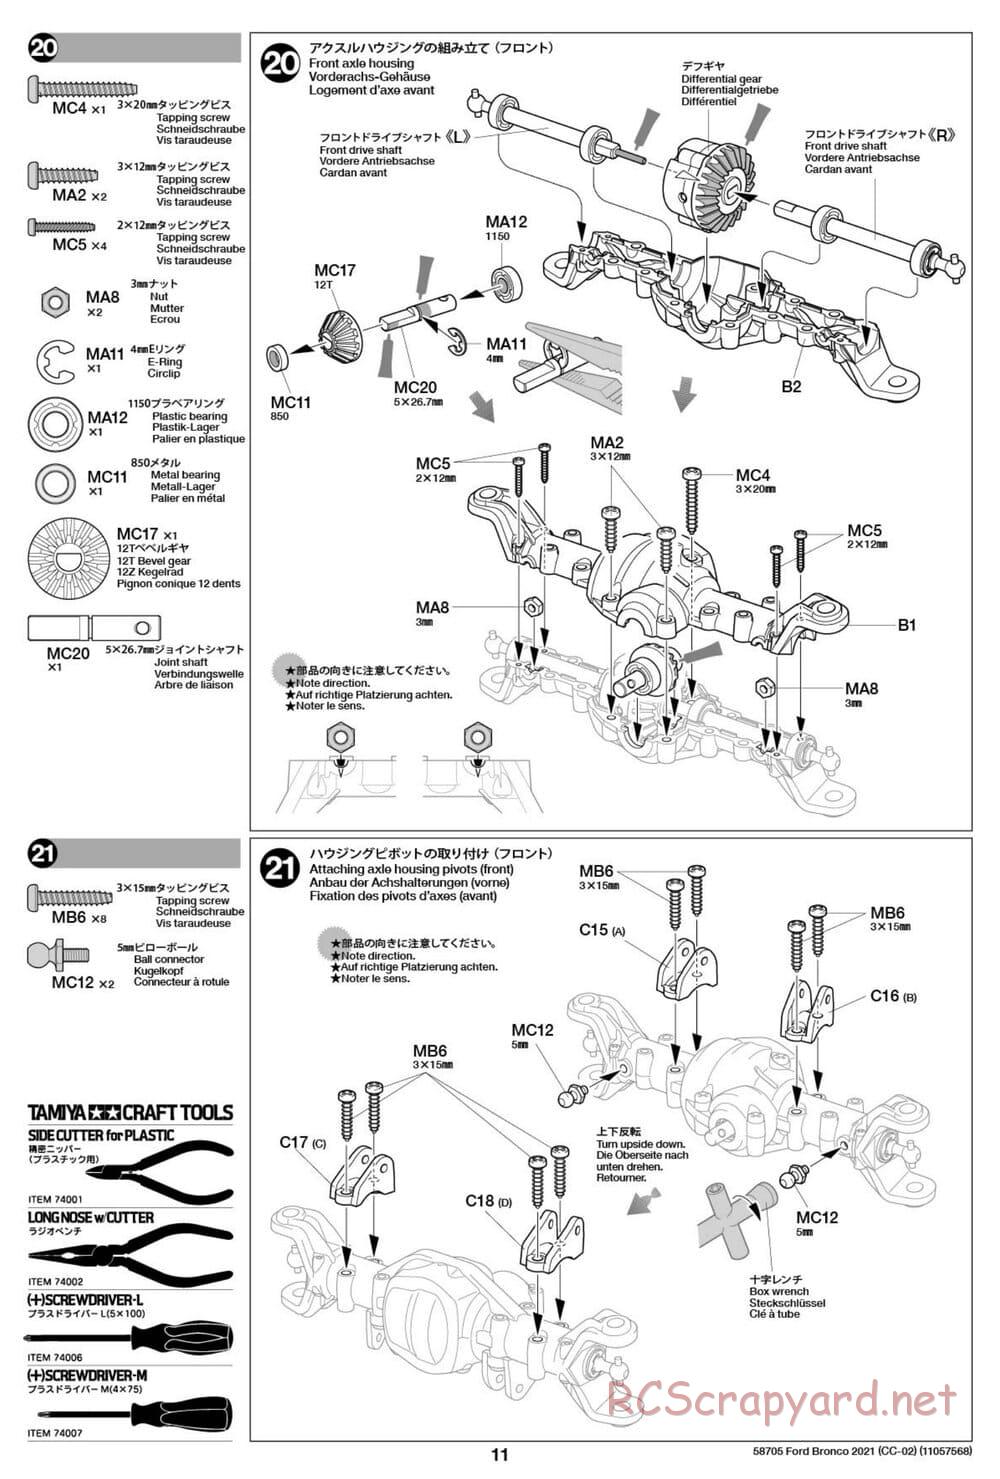 Tamiya - Ford Bronco 2021 - CC-02 Chassis - Manual - Page 11